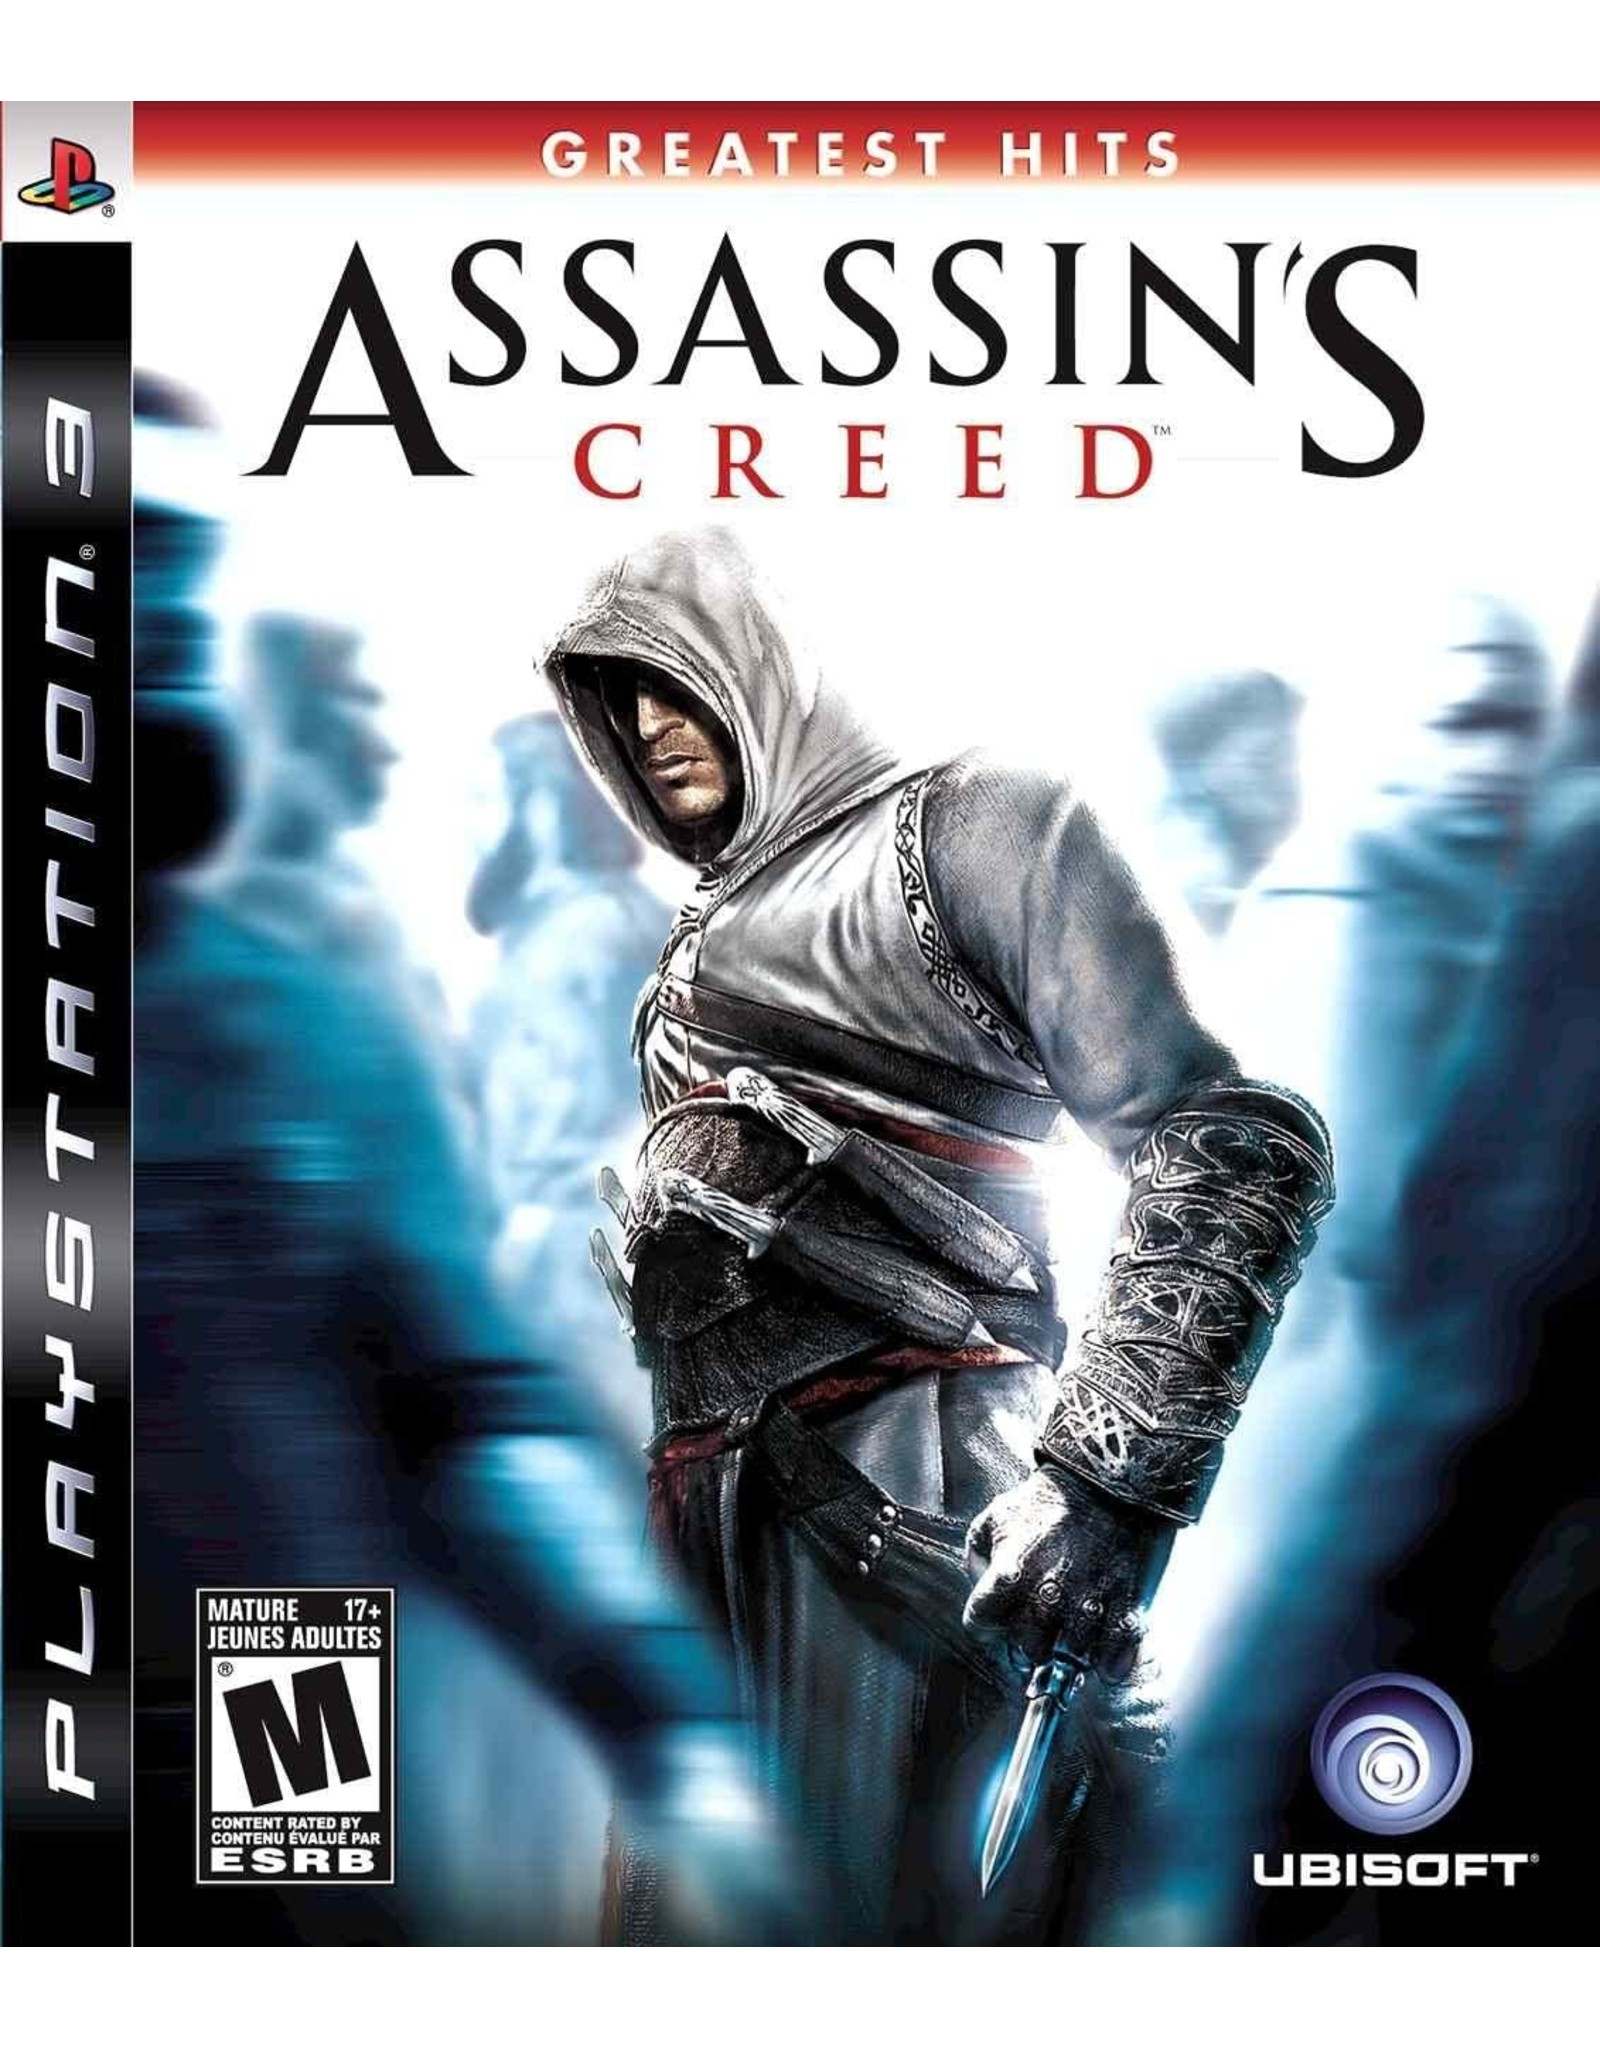 Playstation 3 Assassin's Creed (Greatest Hits, CiB)